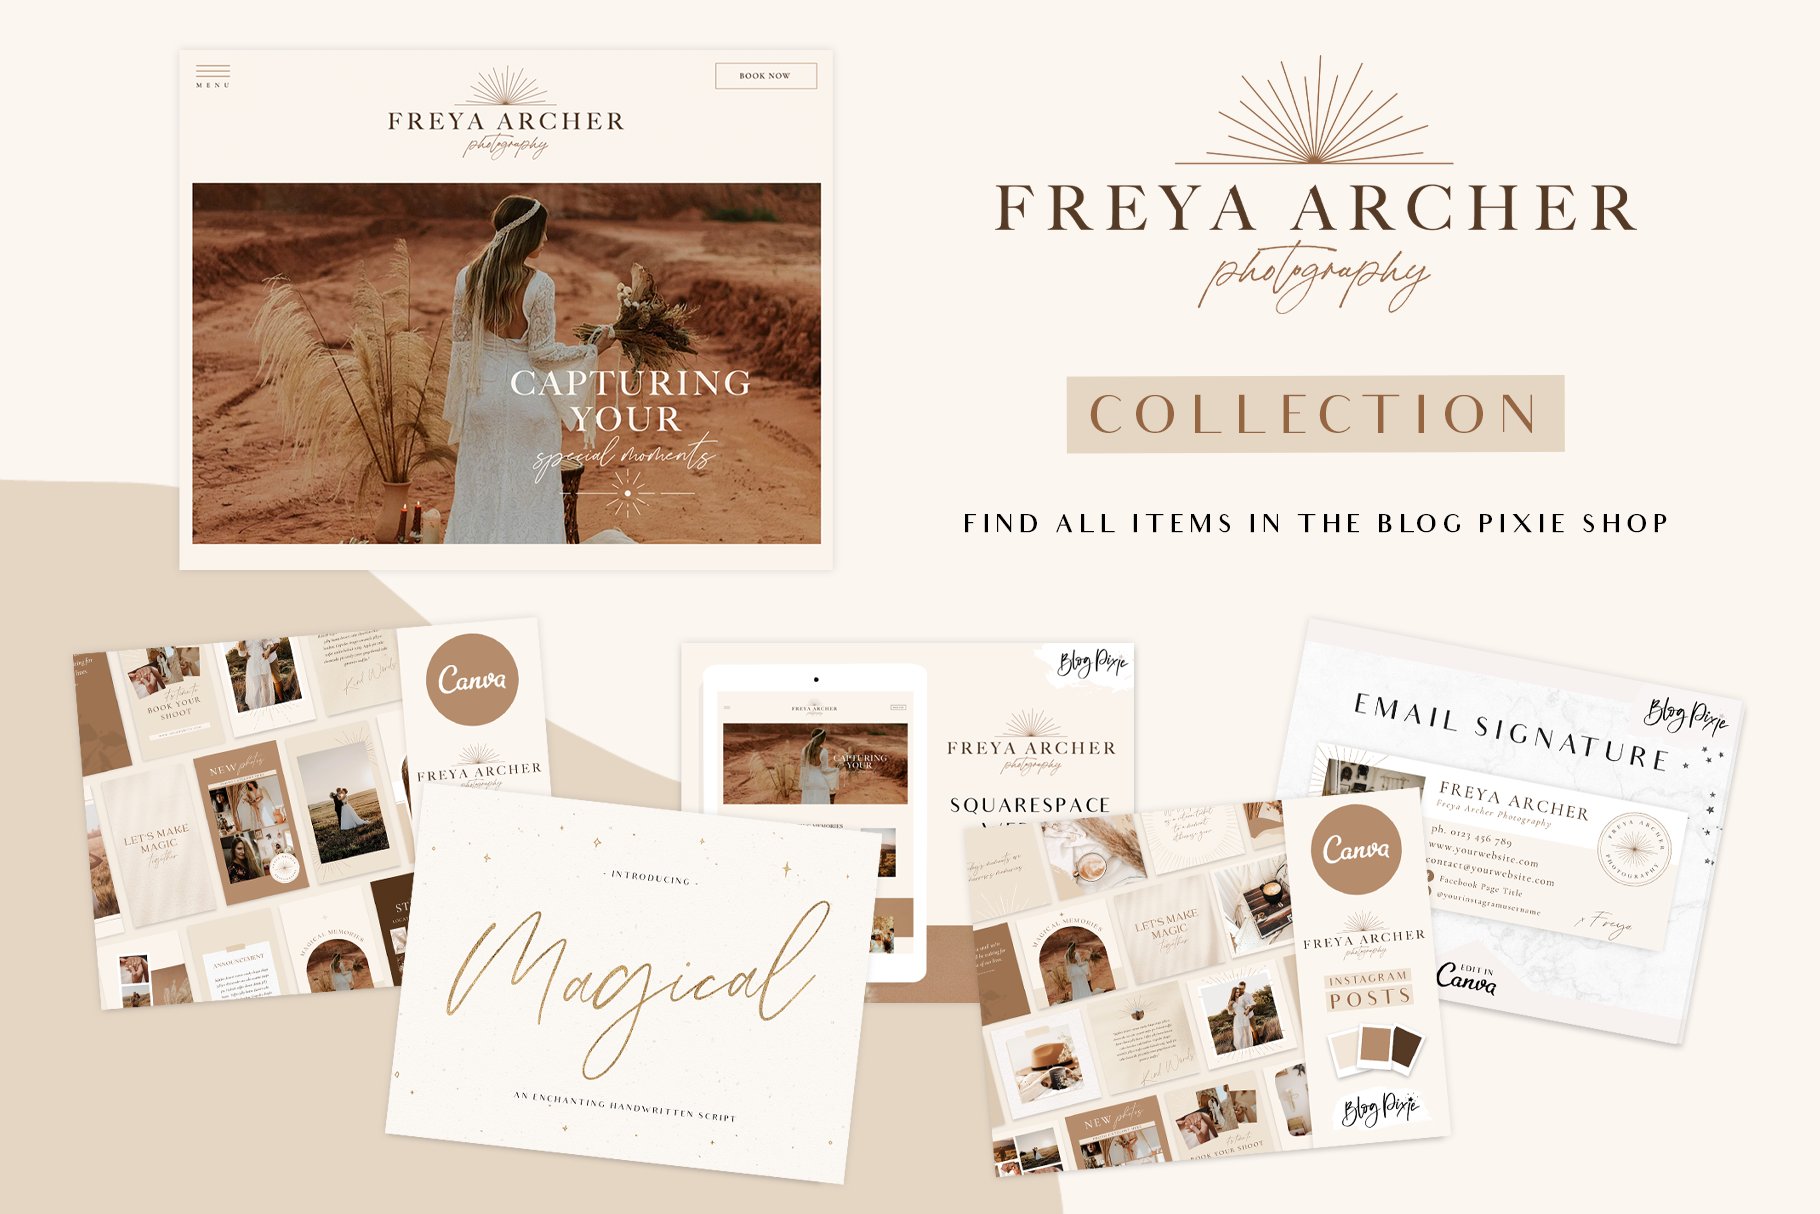 freya archer collection 2 279